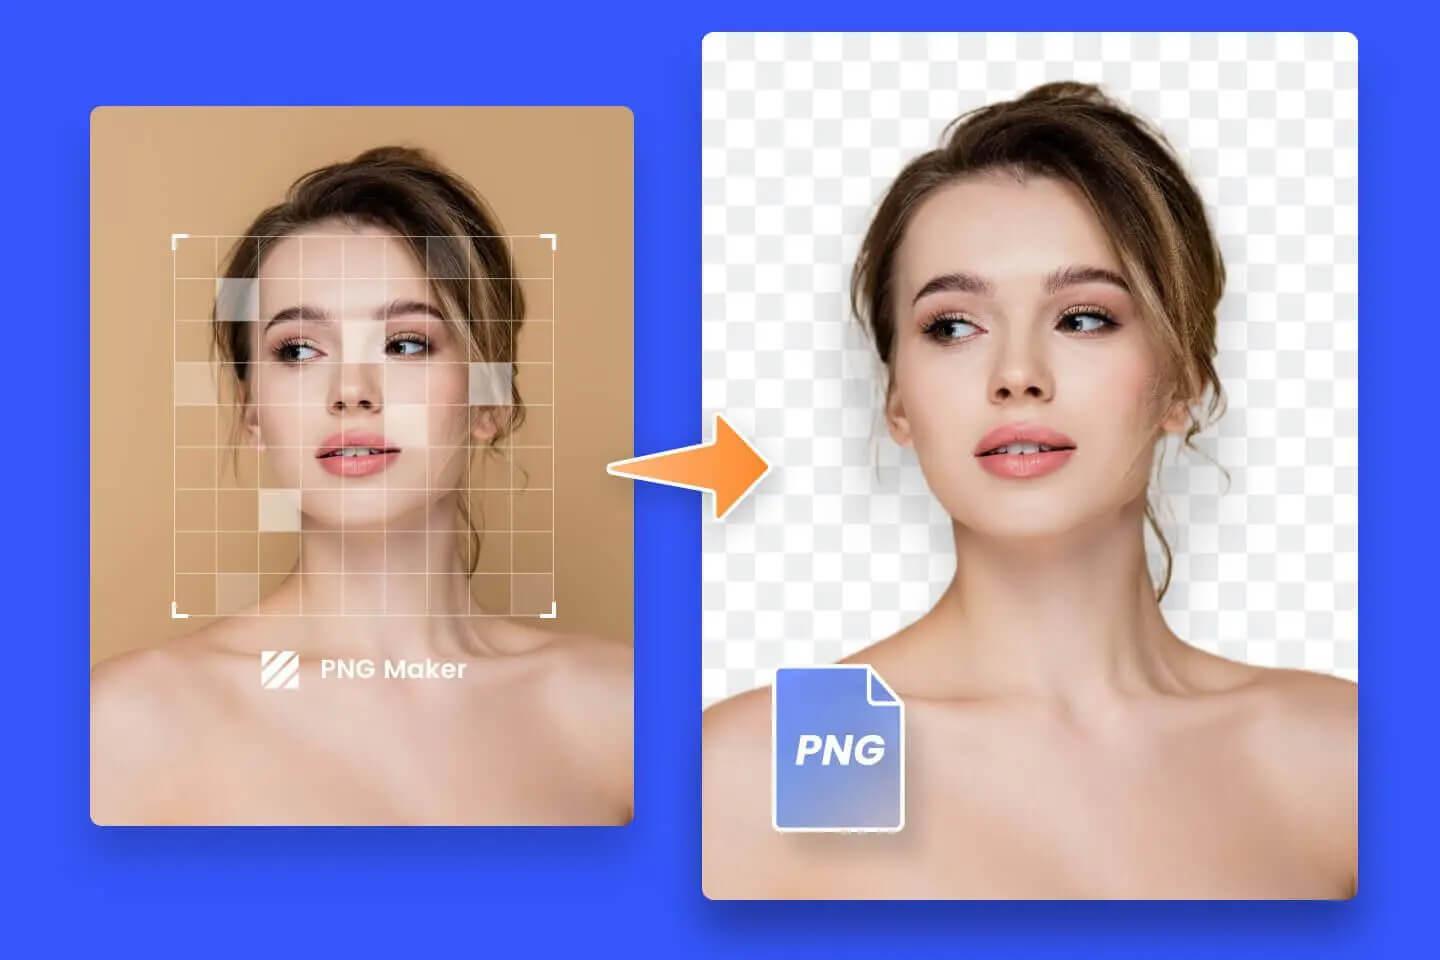 Hacer imagen PNG y convertir imágenes a PNG online gratis | Fotor